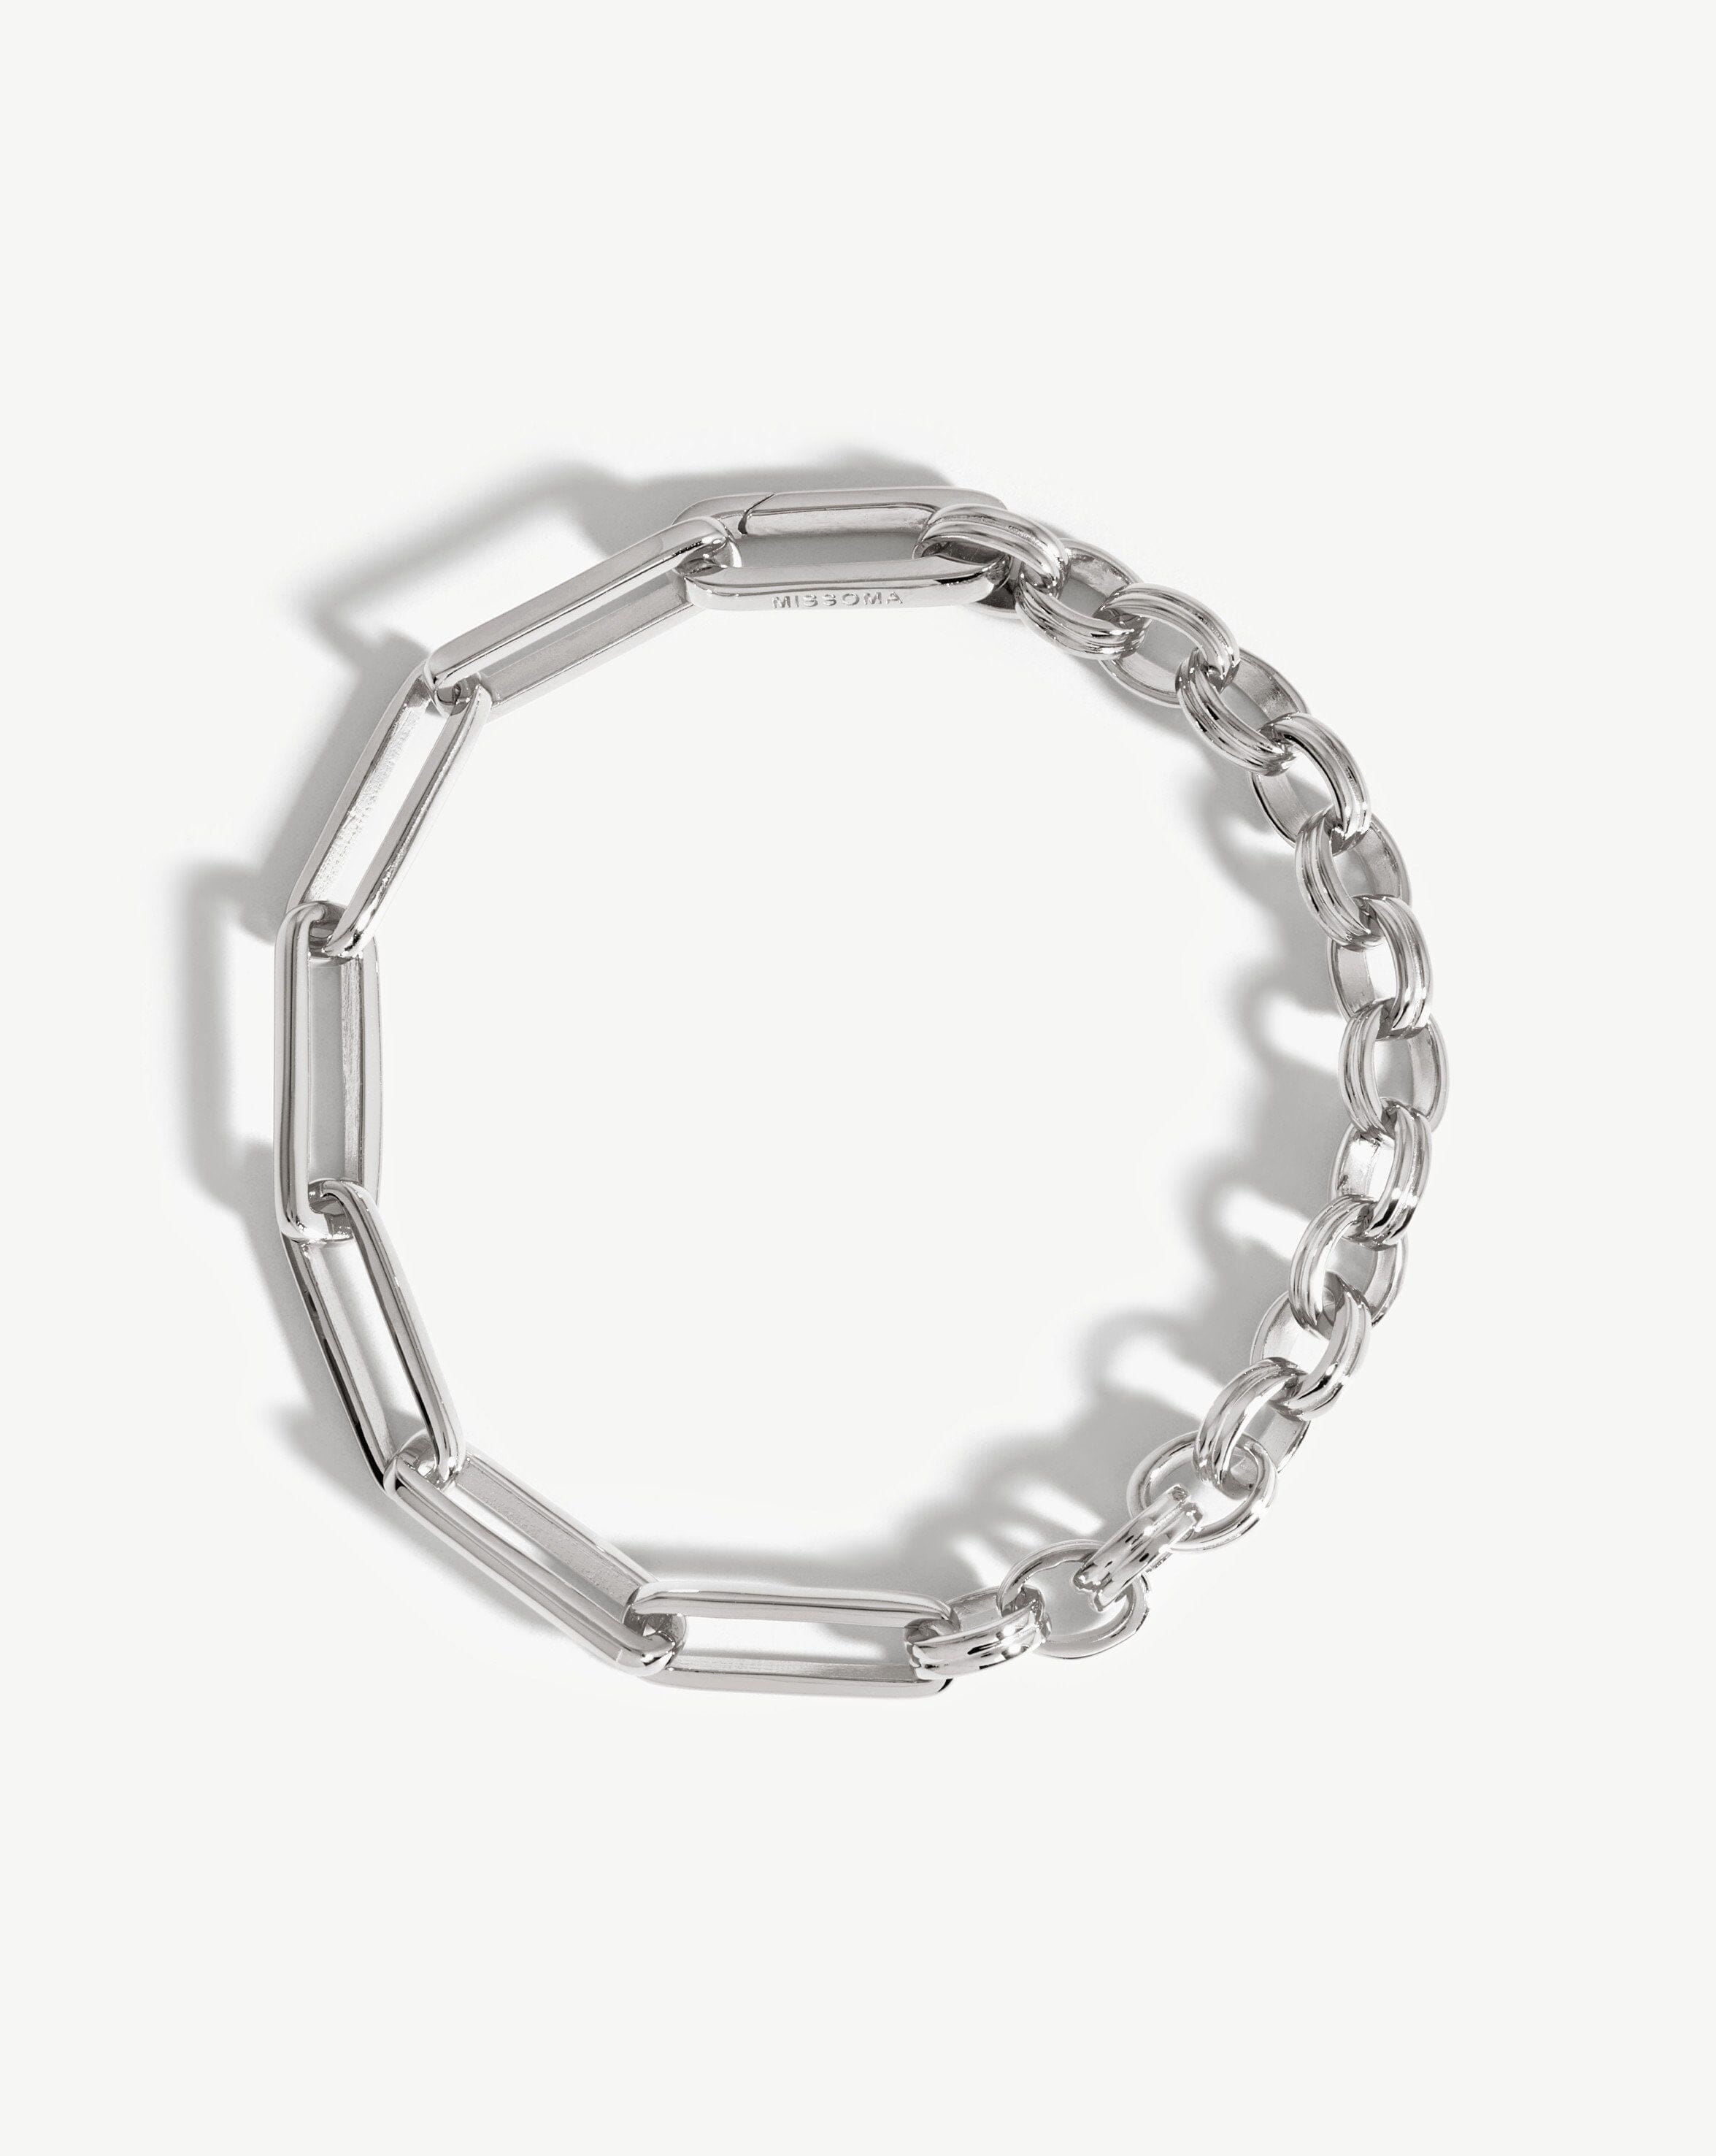 Deconstructed Axiom Chain Bracelet Bracelets Missoma 